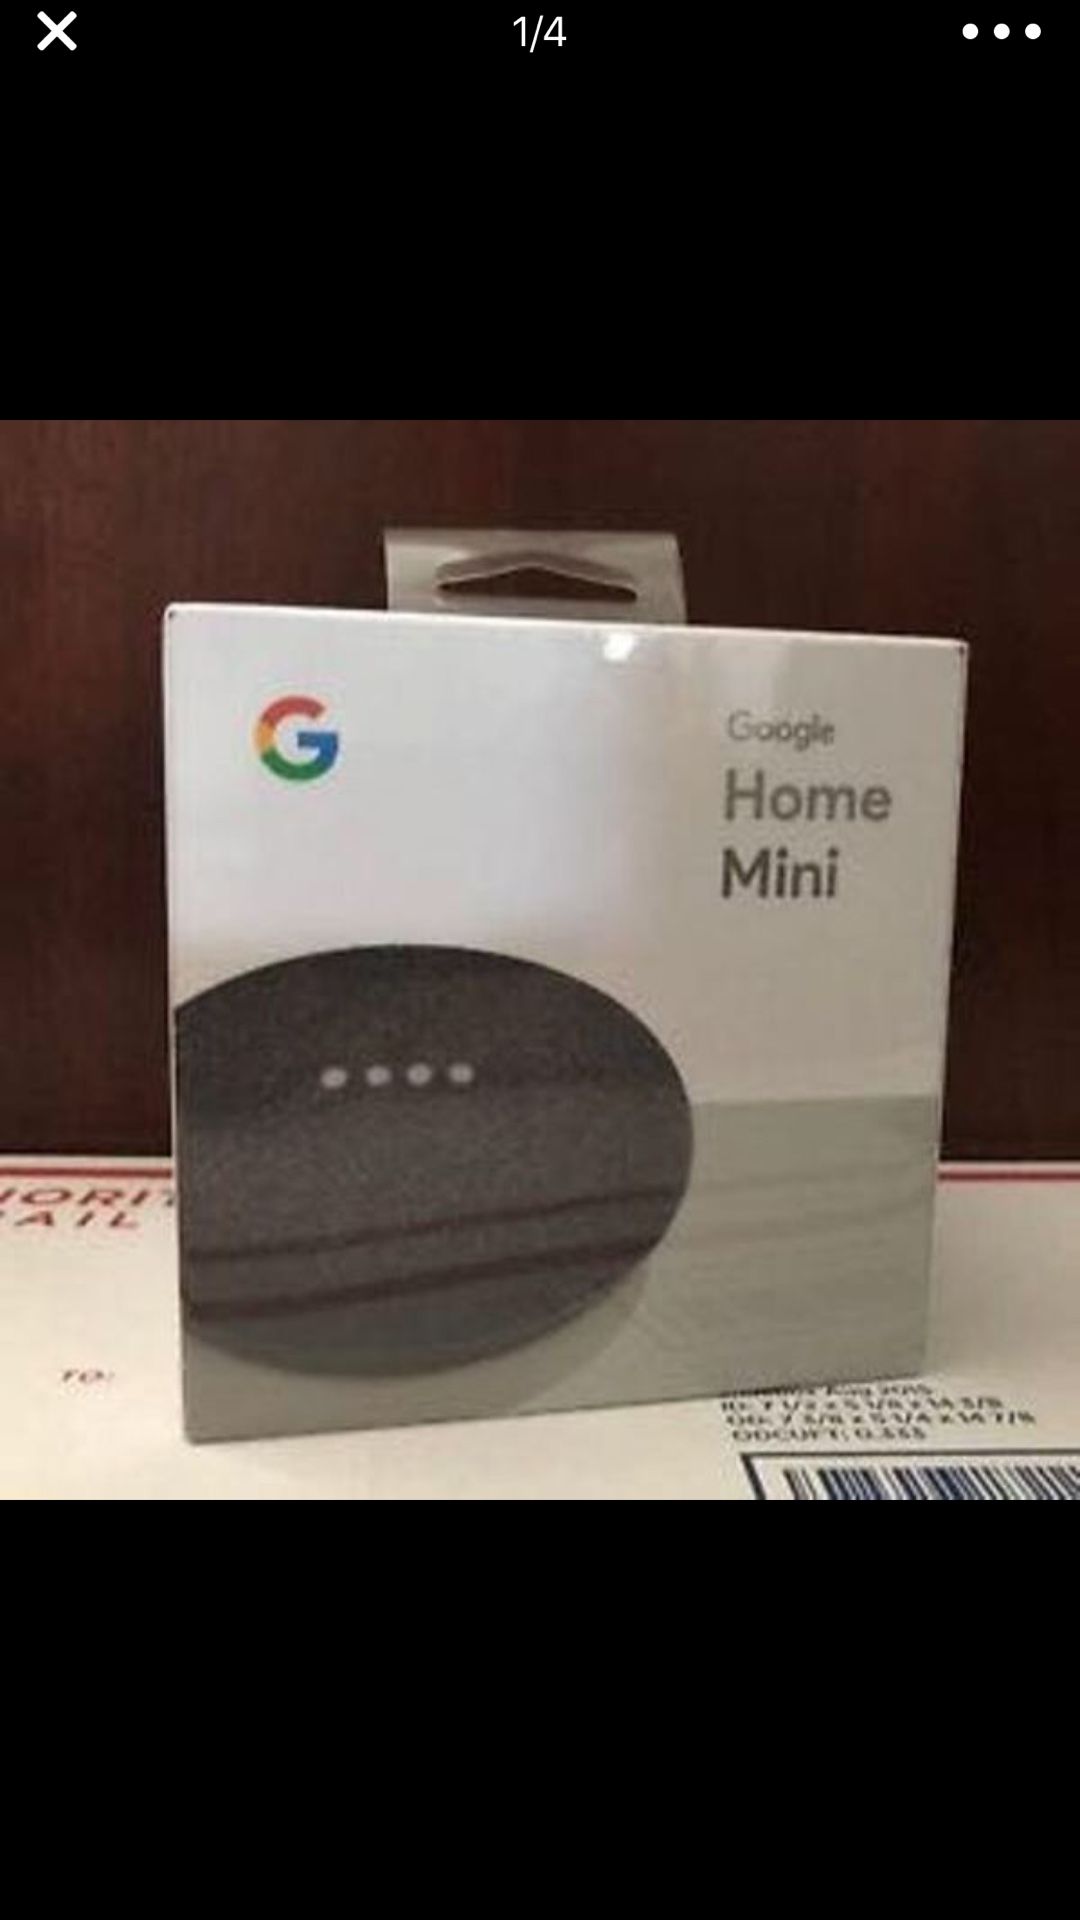 Google Home Mini (Retail is $50)